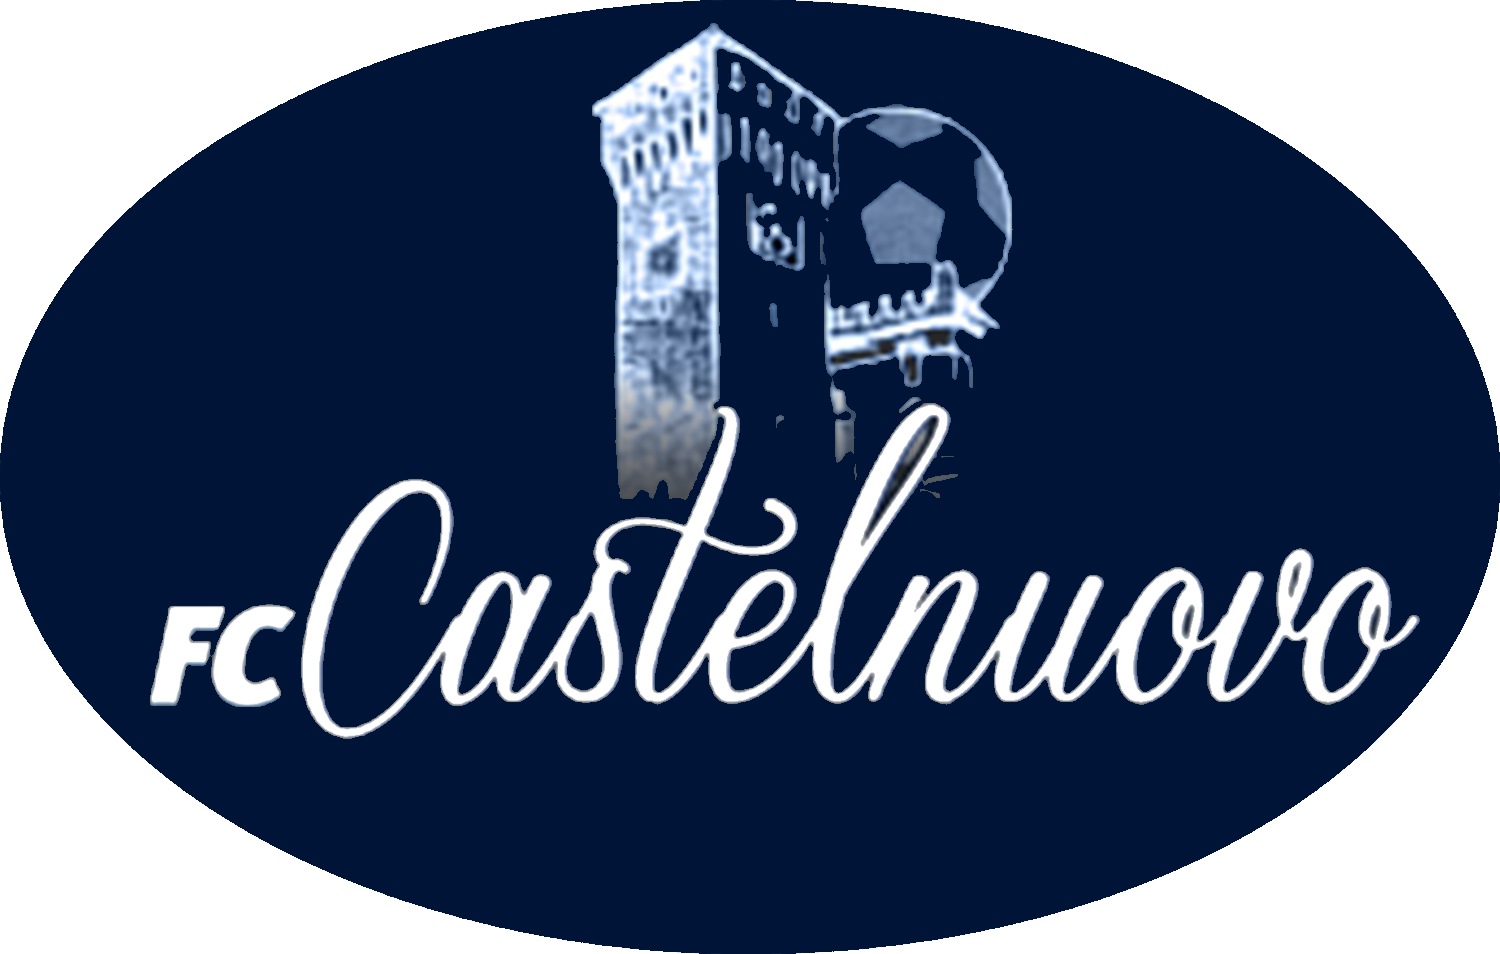 FC CASTELNUOVO v QUARANTOLESE